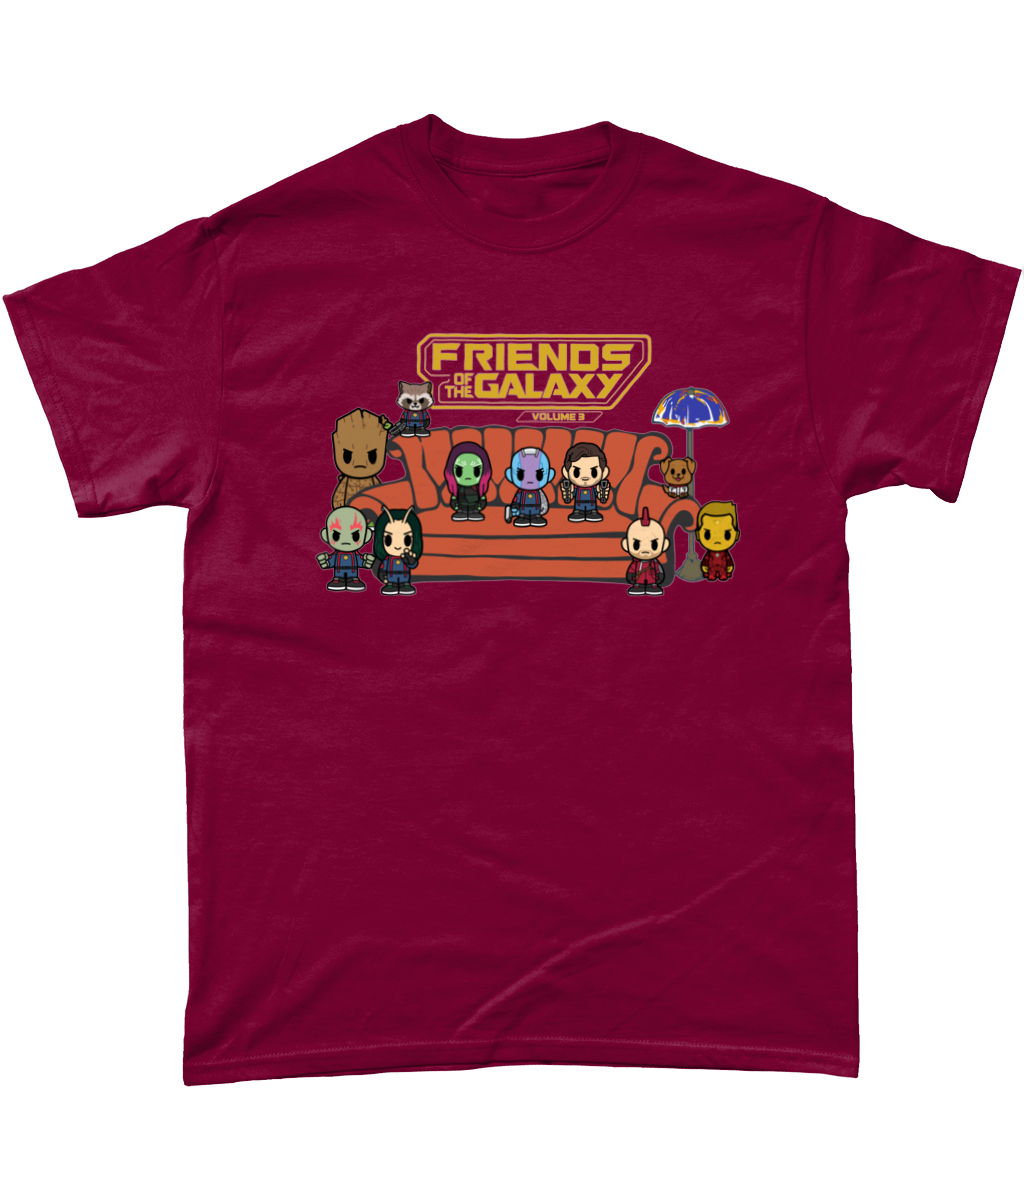 friends of the galaxy Vol 3 t-shirt